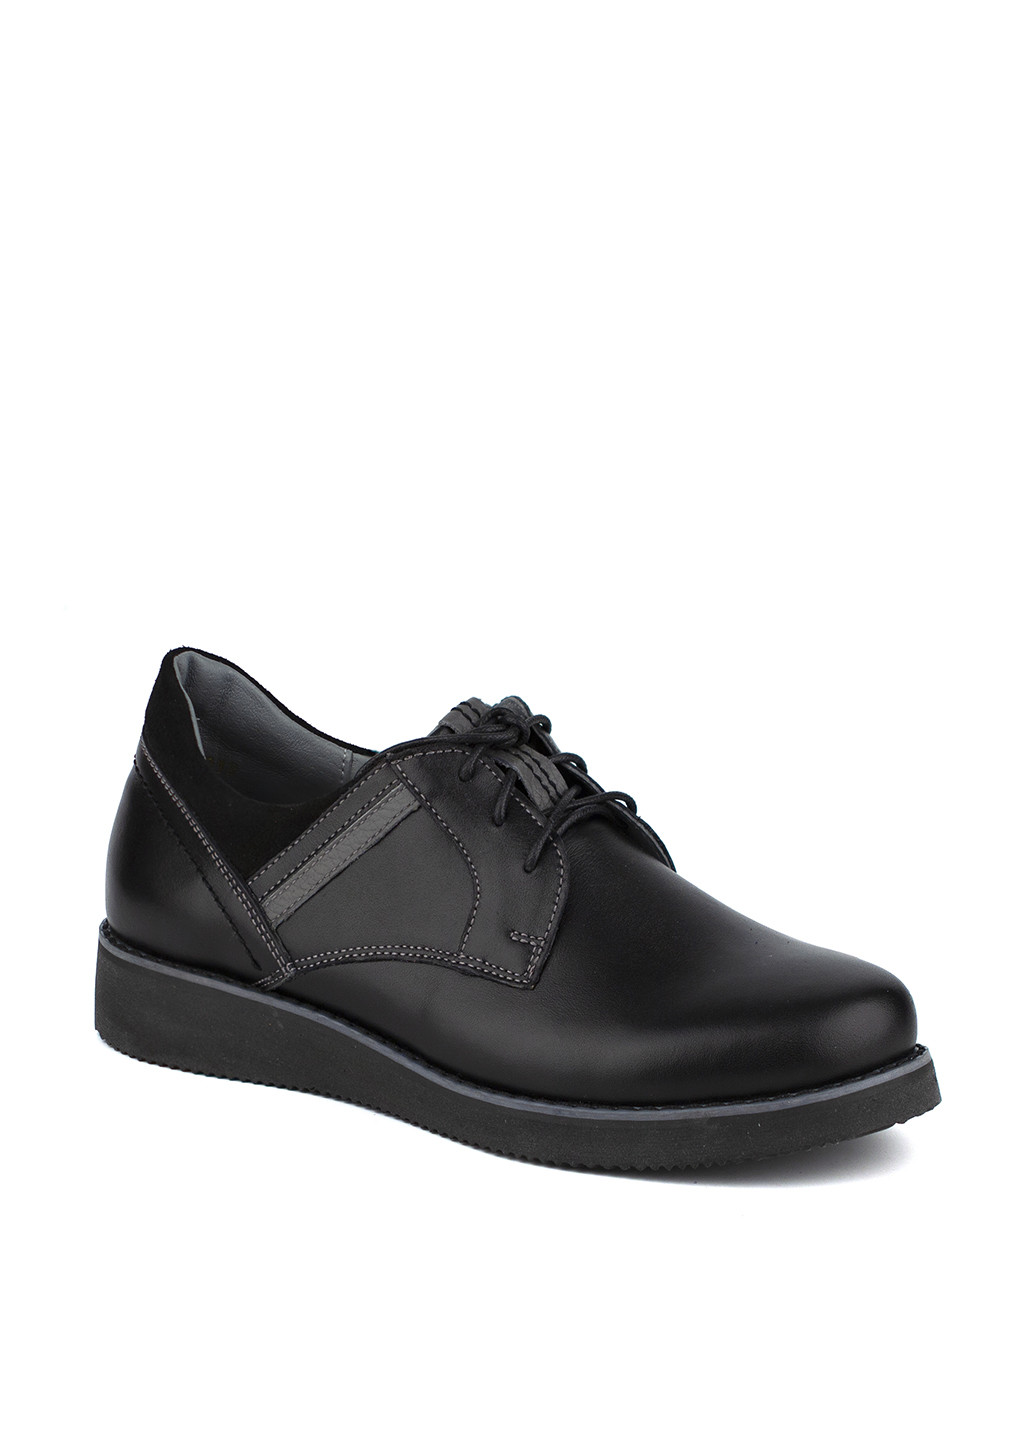 Черные туфли со шнурками ShagoVita